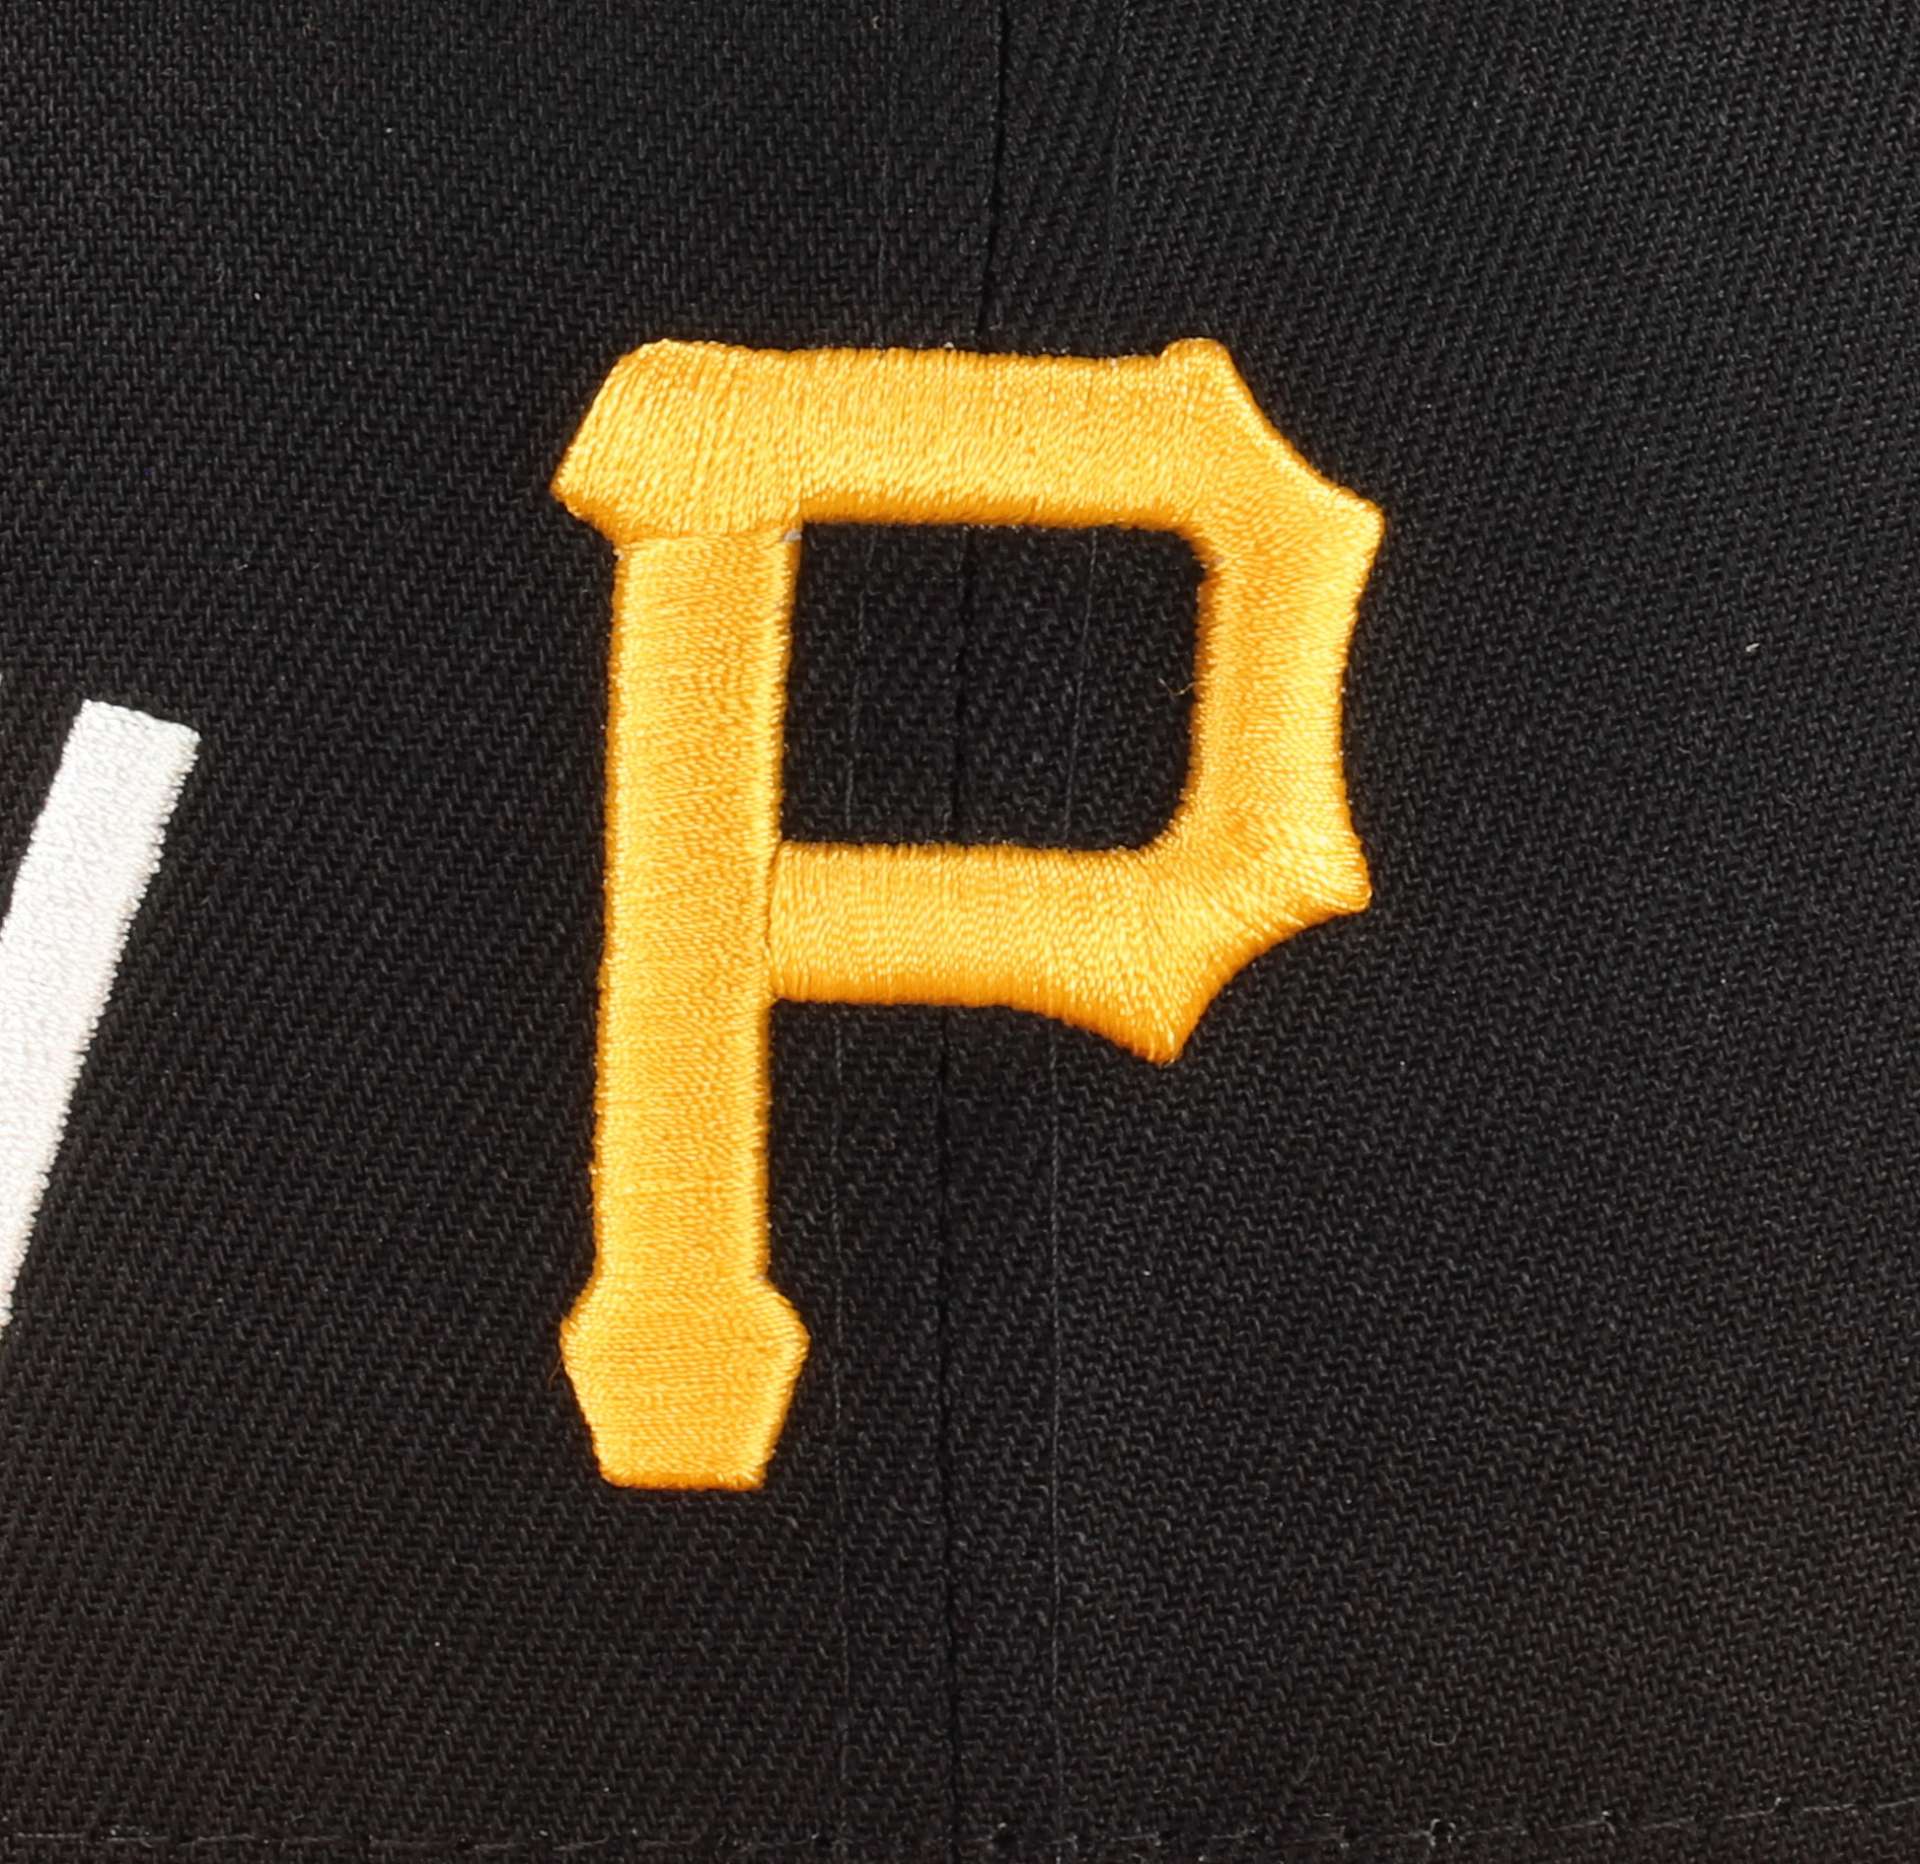 Pittsburgh Pirates Sidefont Black / Yellow 9Fifty Snapback Cap New Era